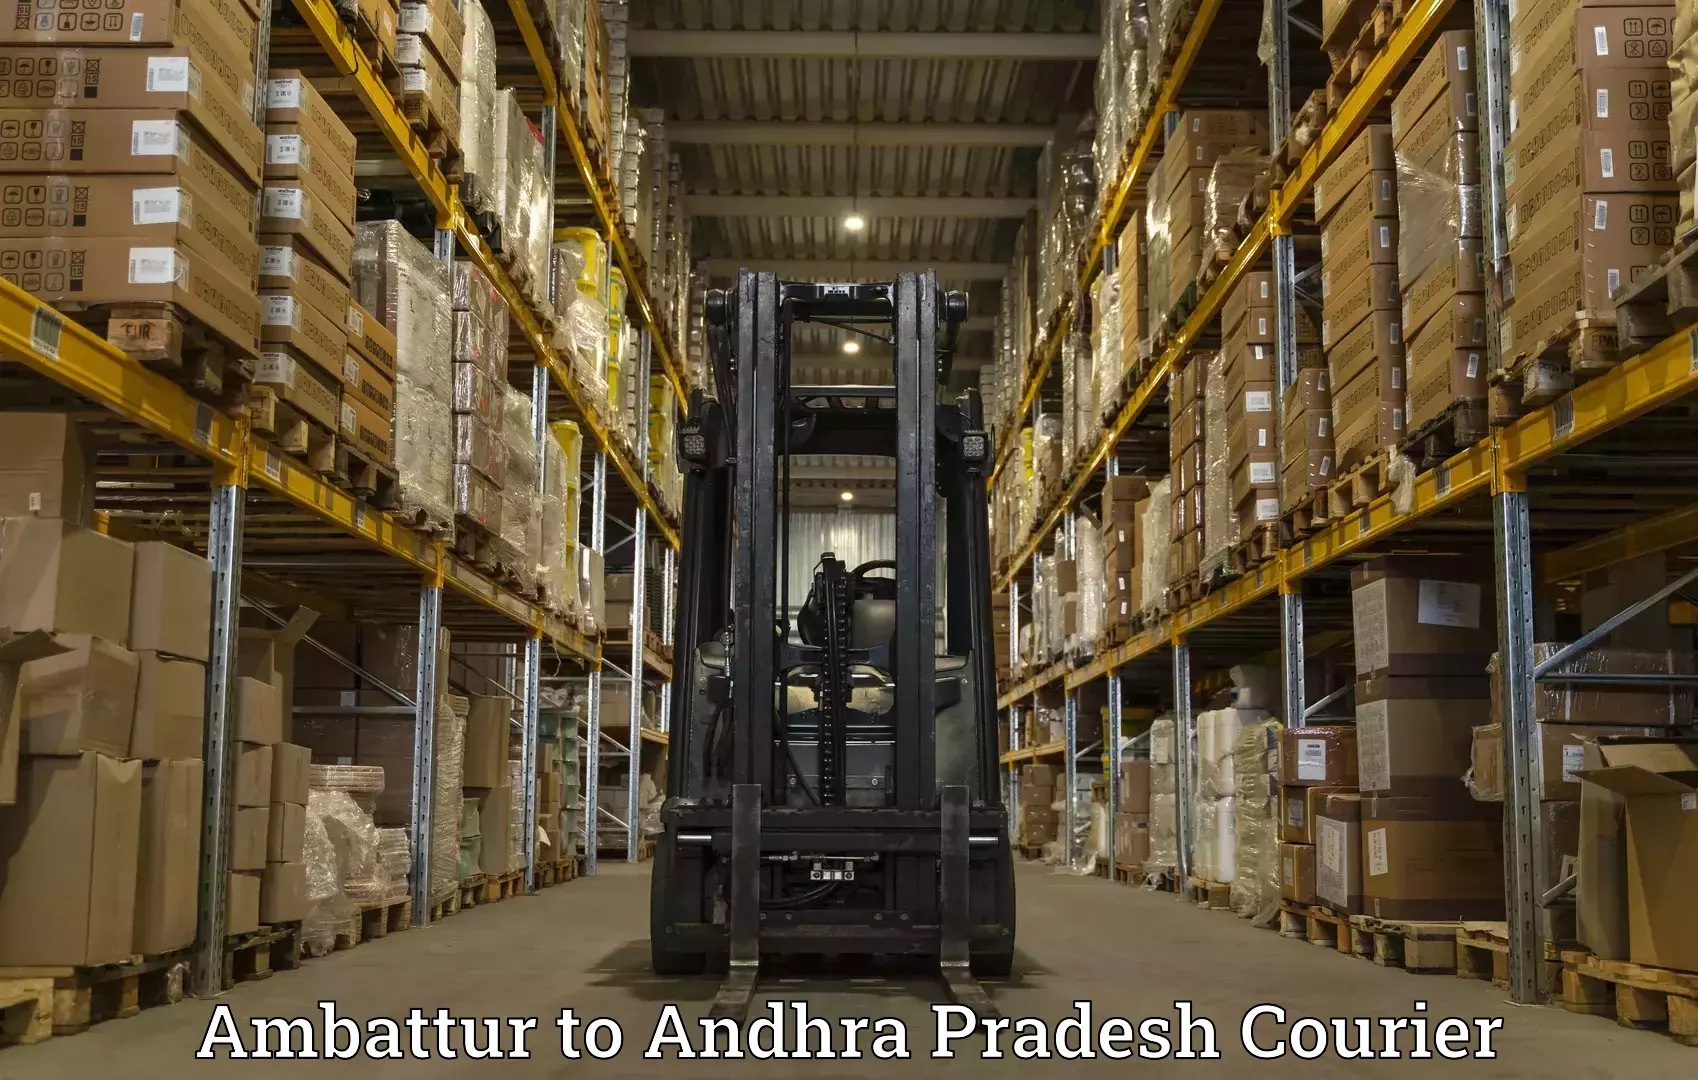 Advanced shipping network Ambattur to Visakhapatnam Port